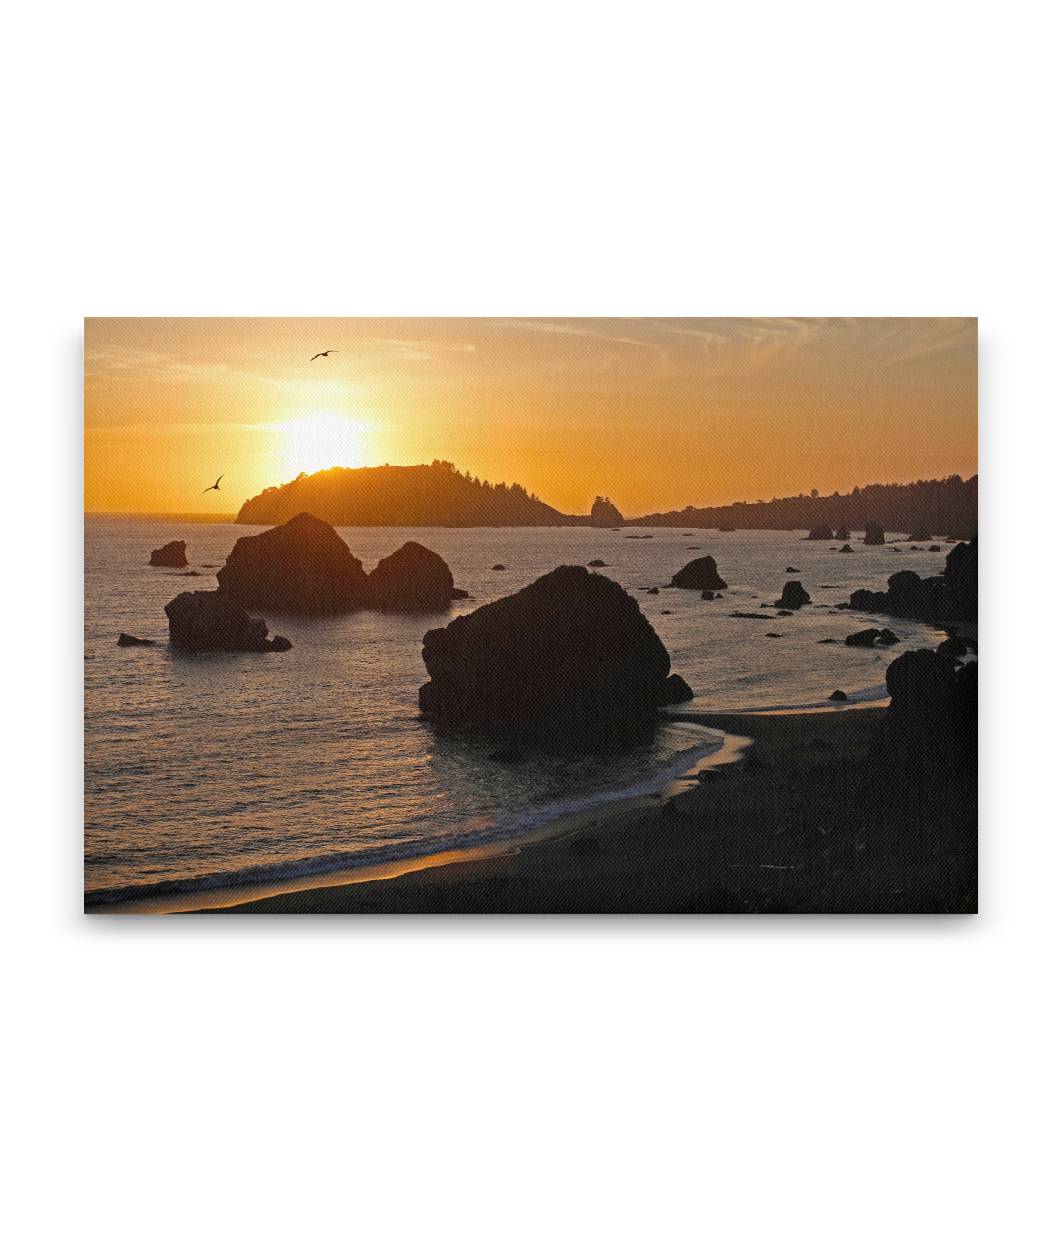 Trinidad Head and offshore rocks at sunset, Trinidad Bay, California